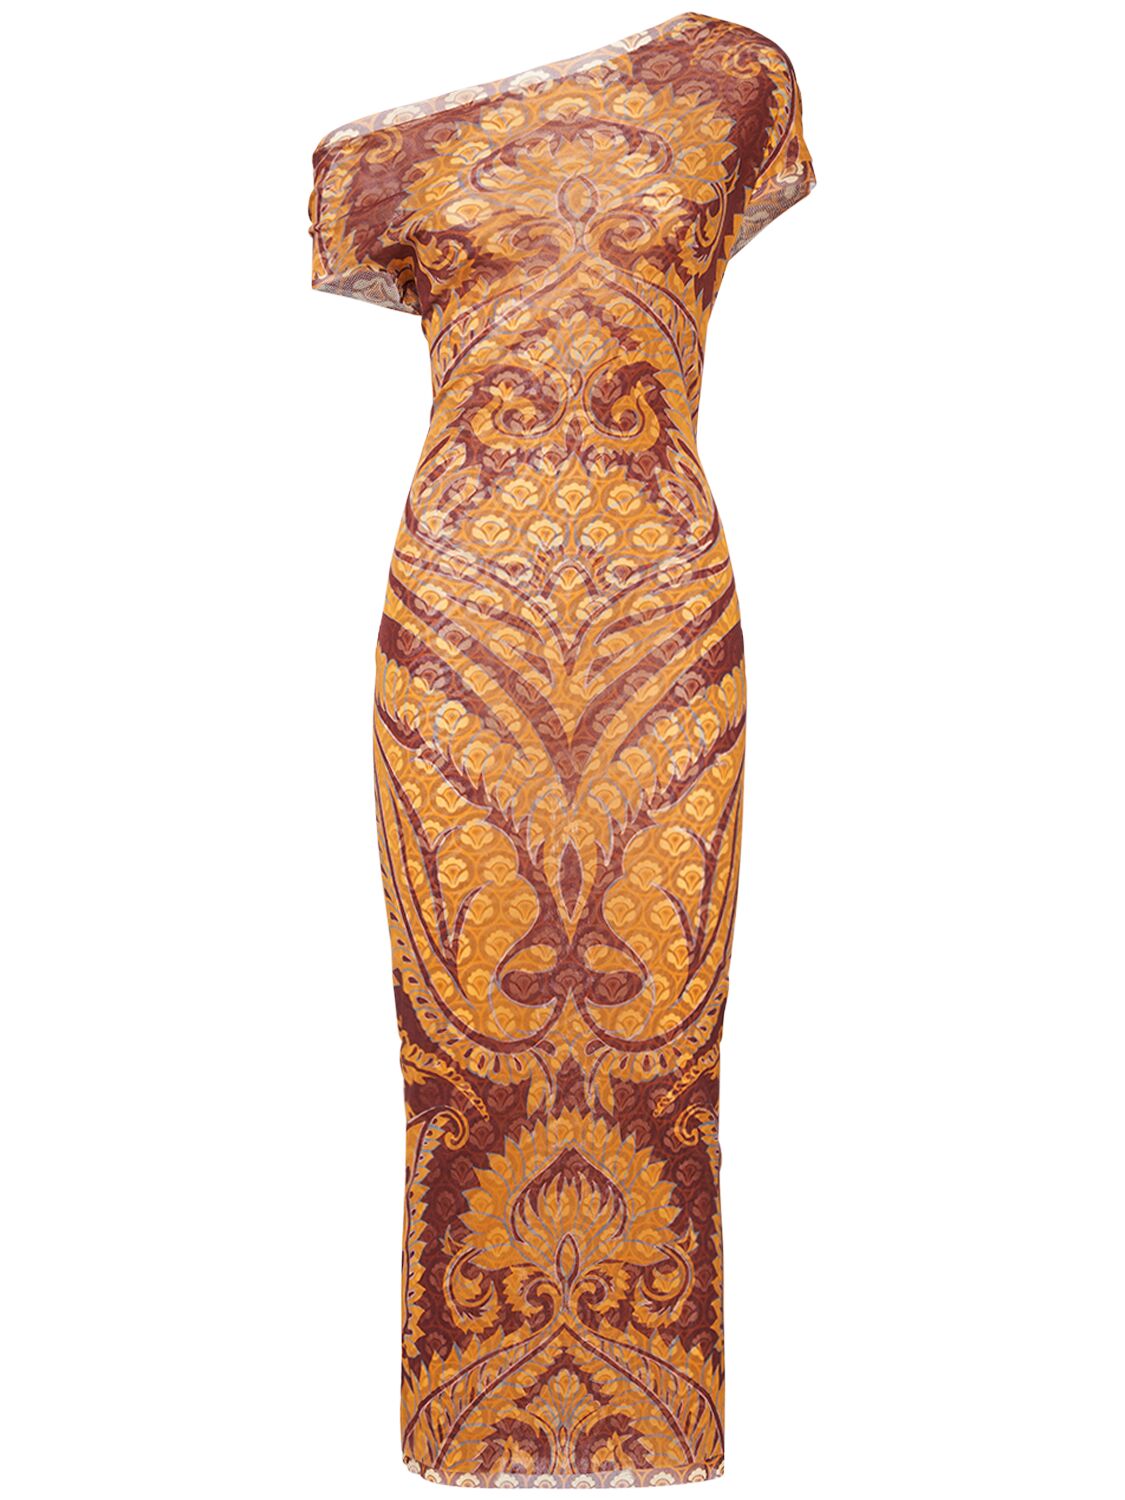 Image of Printed Mesh Dress